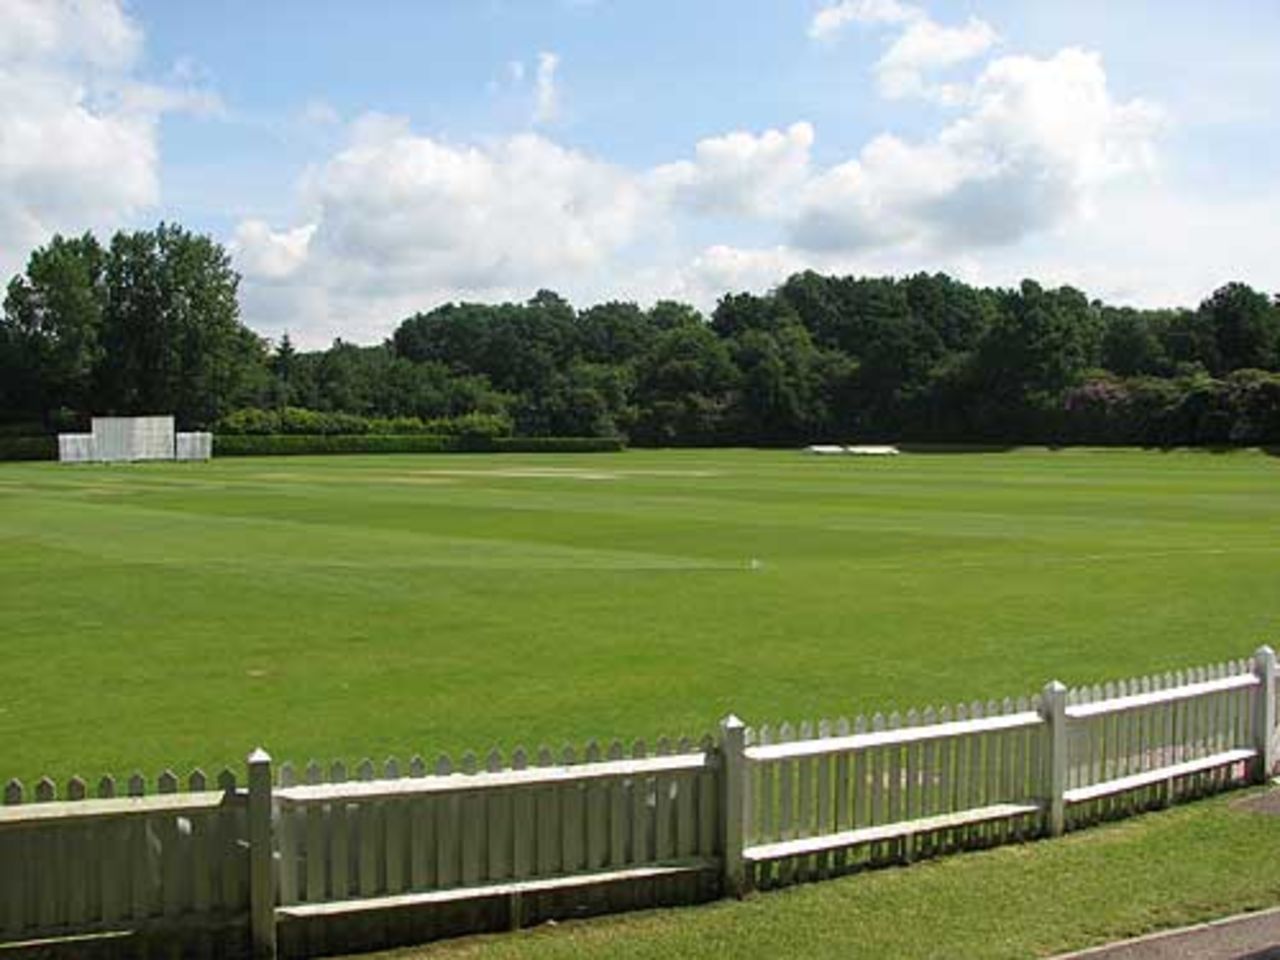 The Nevill Ground, Tunbridge Wells